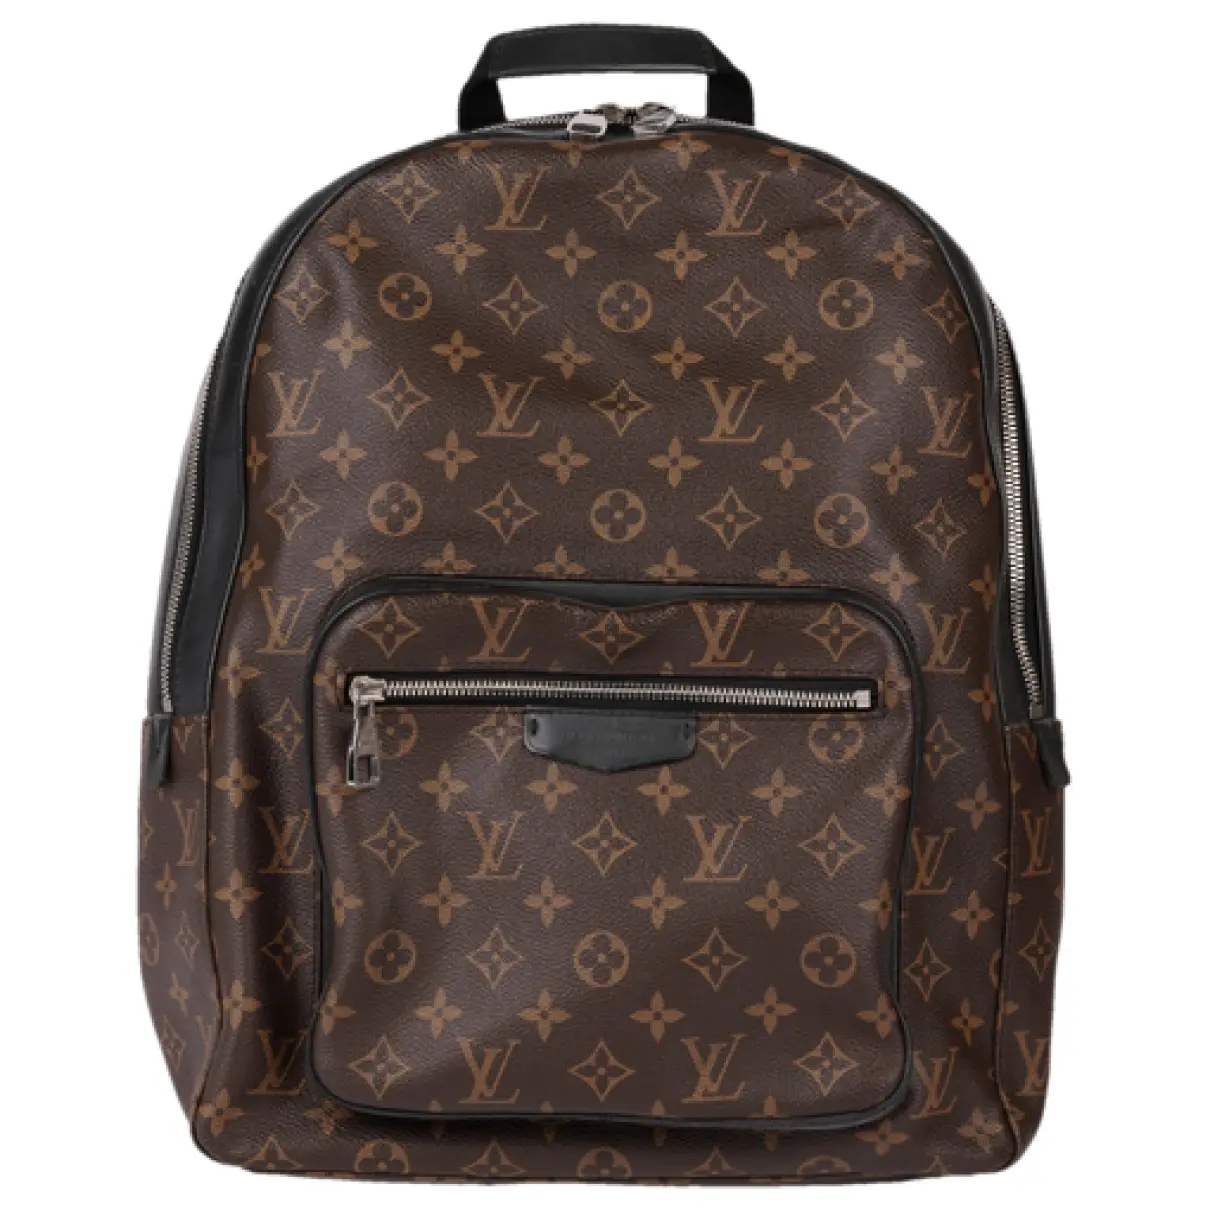 Josh Backpack leather bag